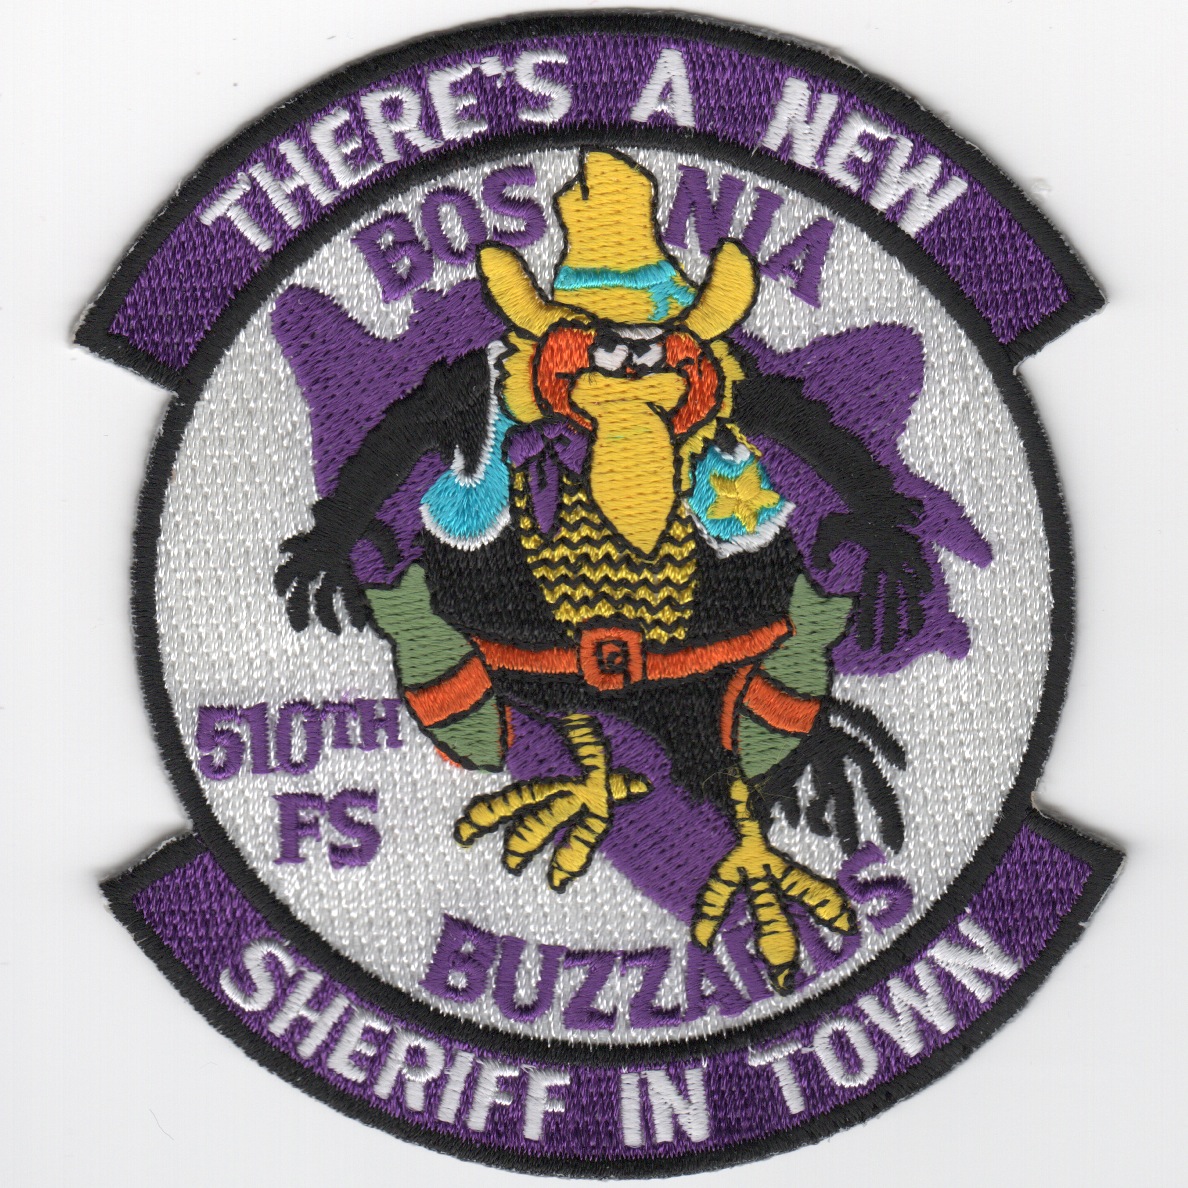 FSS - 510FS 'NEW SHERIFF' Patch